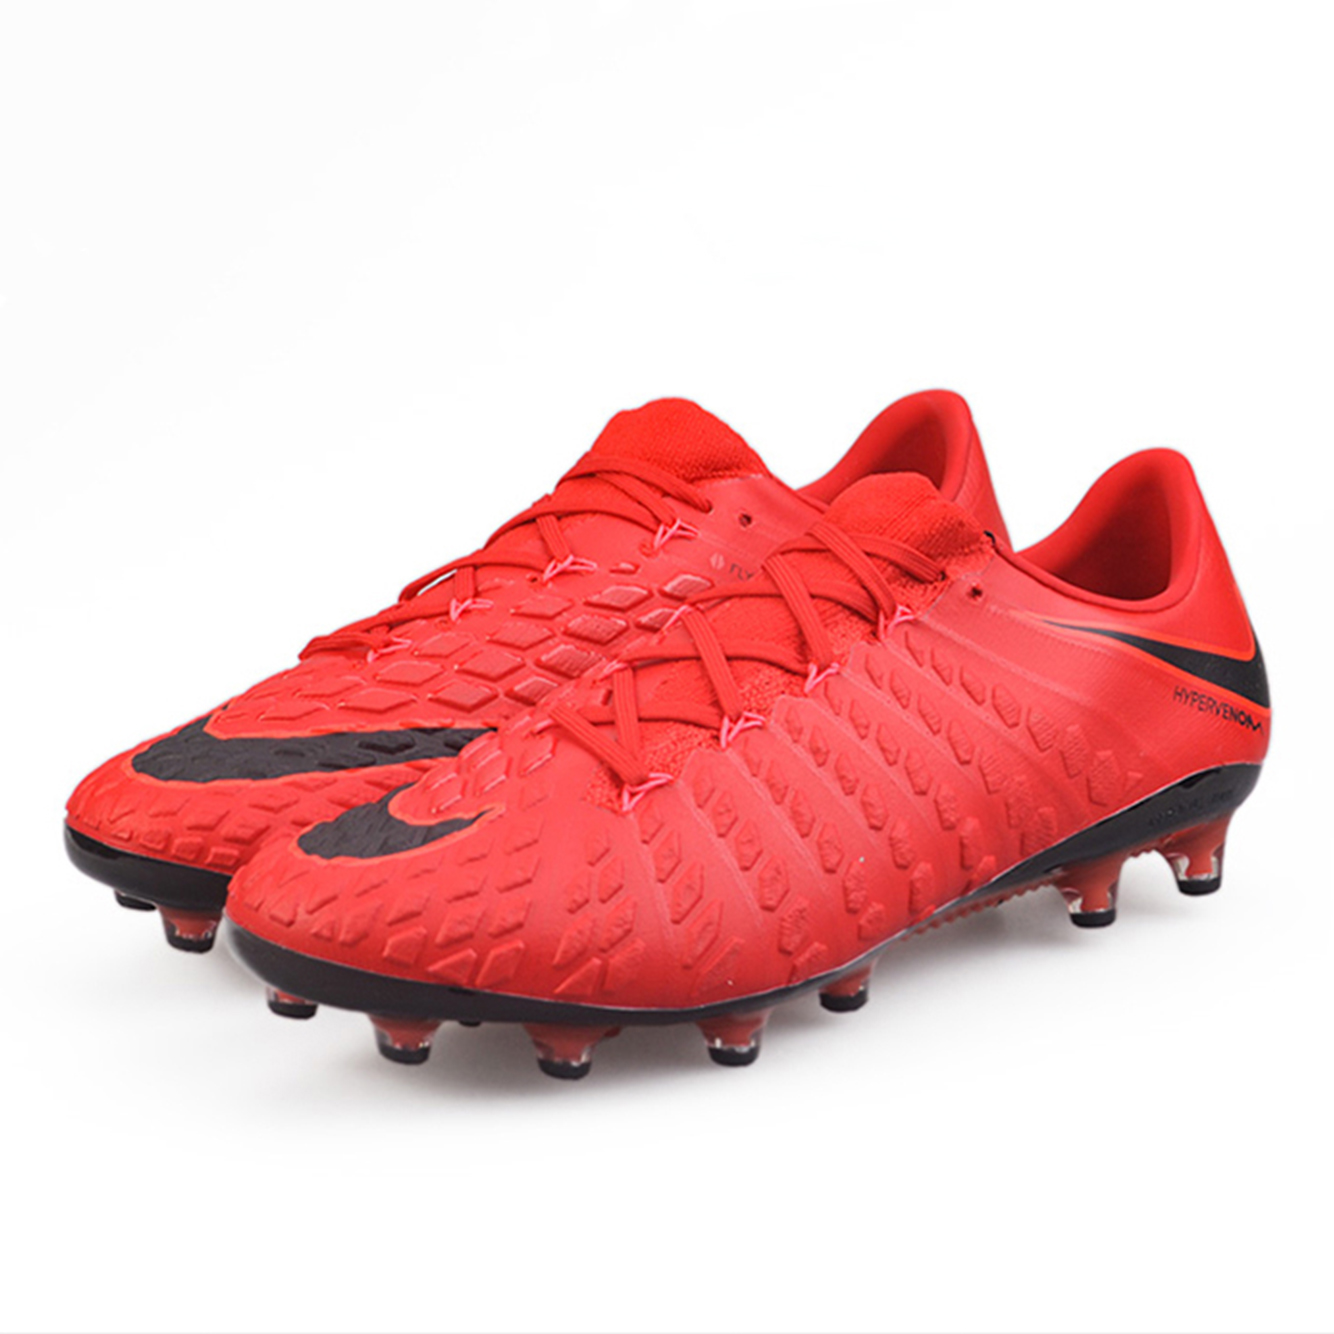 Nike Hypervenom Phantom III Pro D Fit AG Pro Football Boots